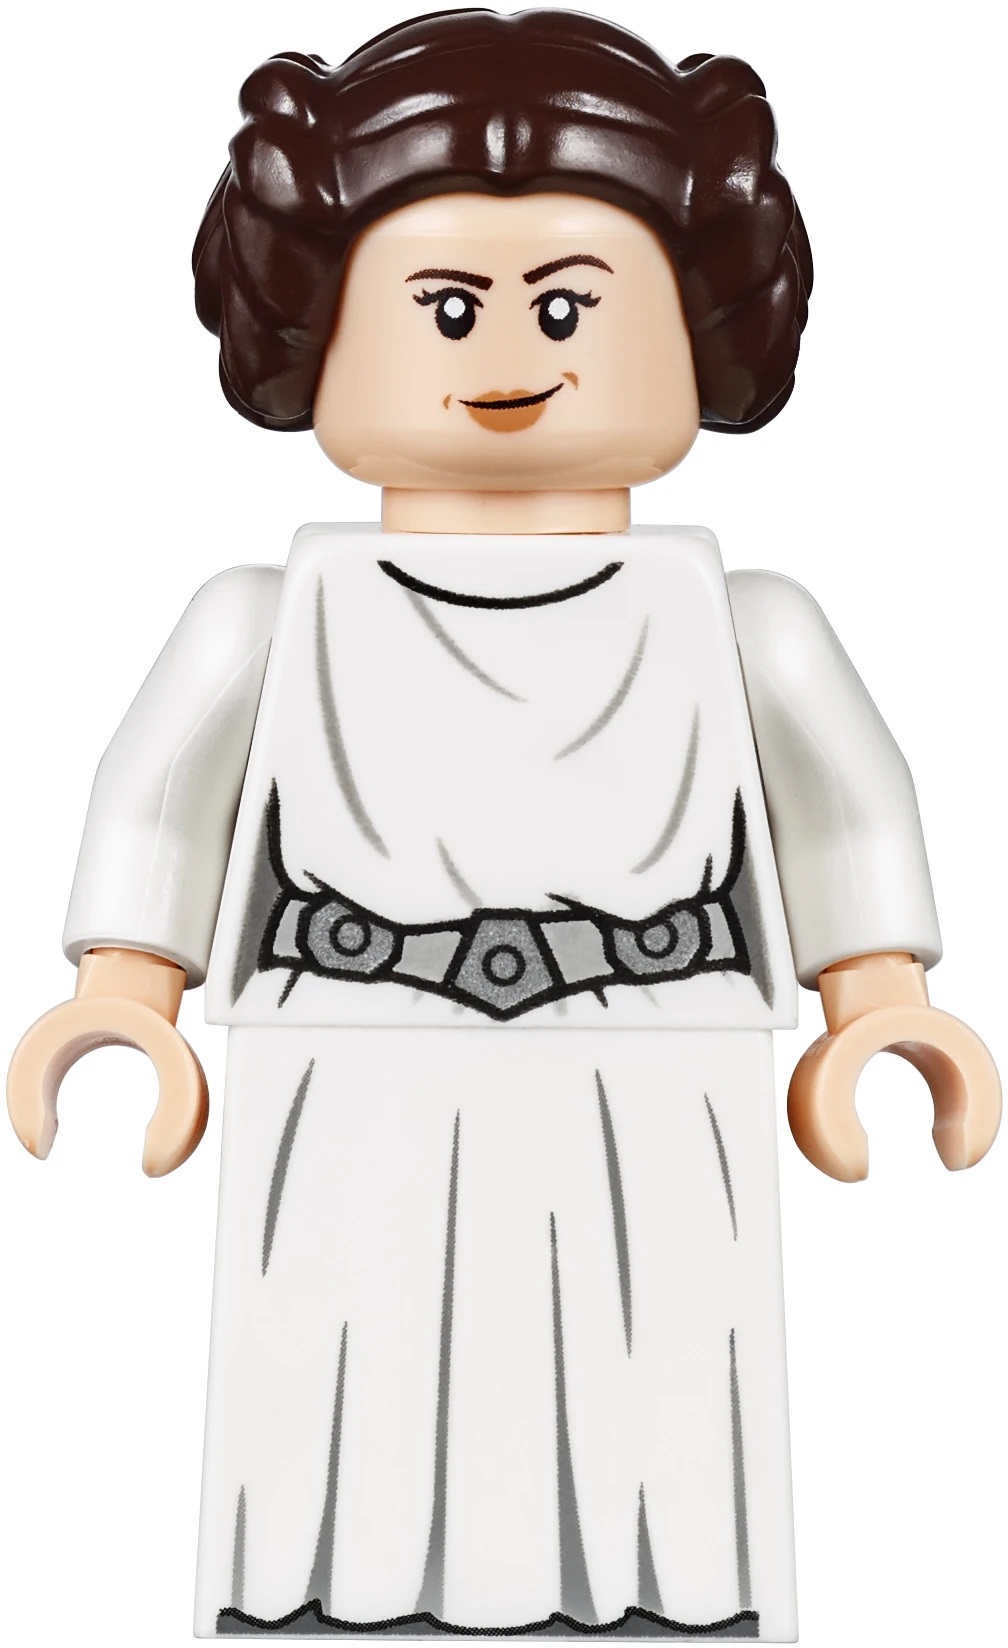 LEGO STAR WARS 10188 Princess Leia Minifigure New 